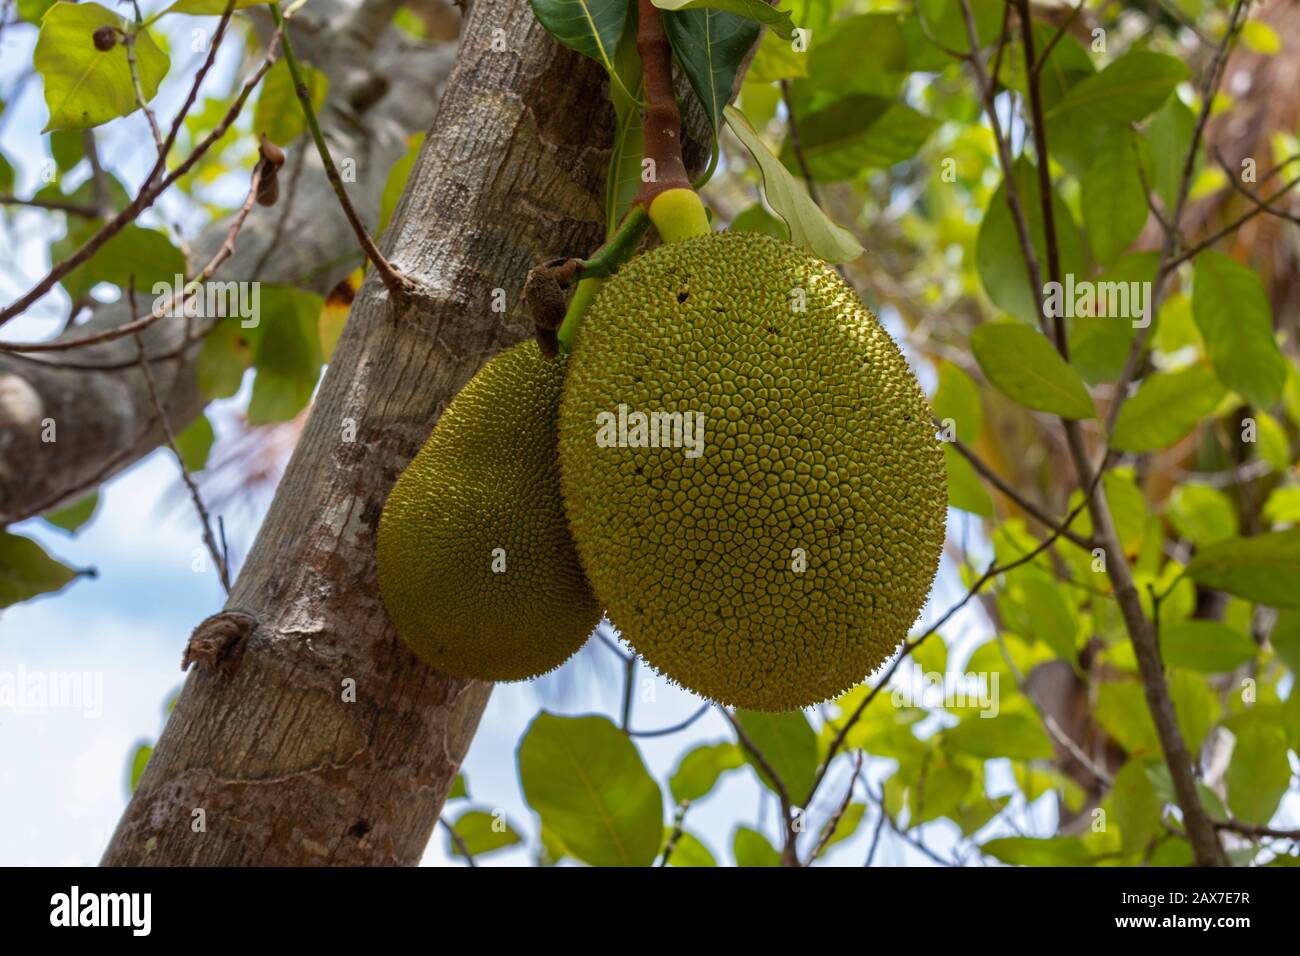 Pair of jackfruit (Artocarpus heterophyllus) hanging from tree on a farm in Indonesia. Stock Photo